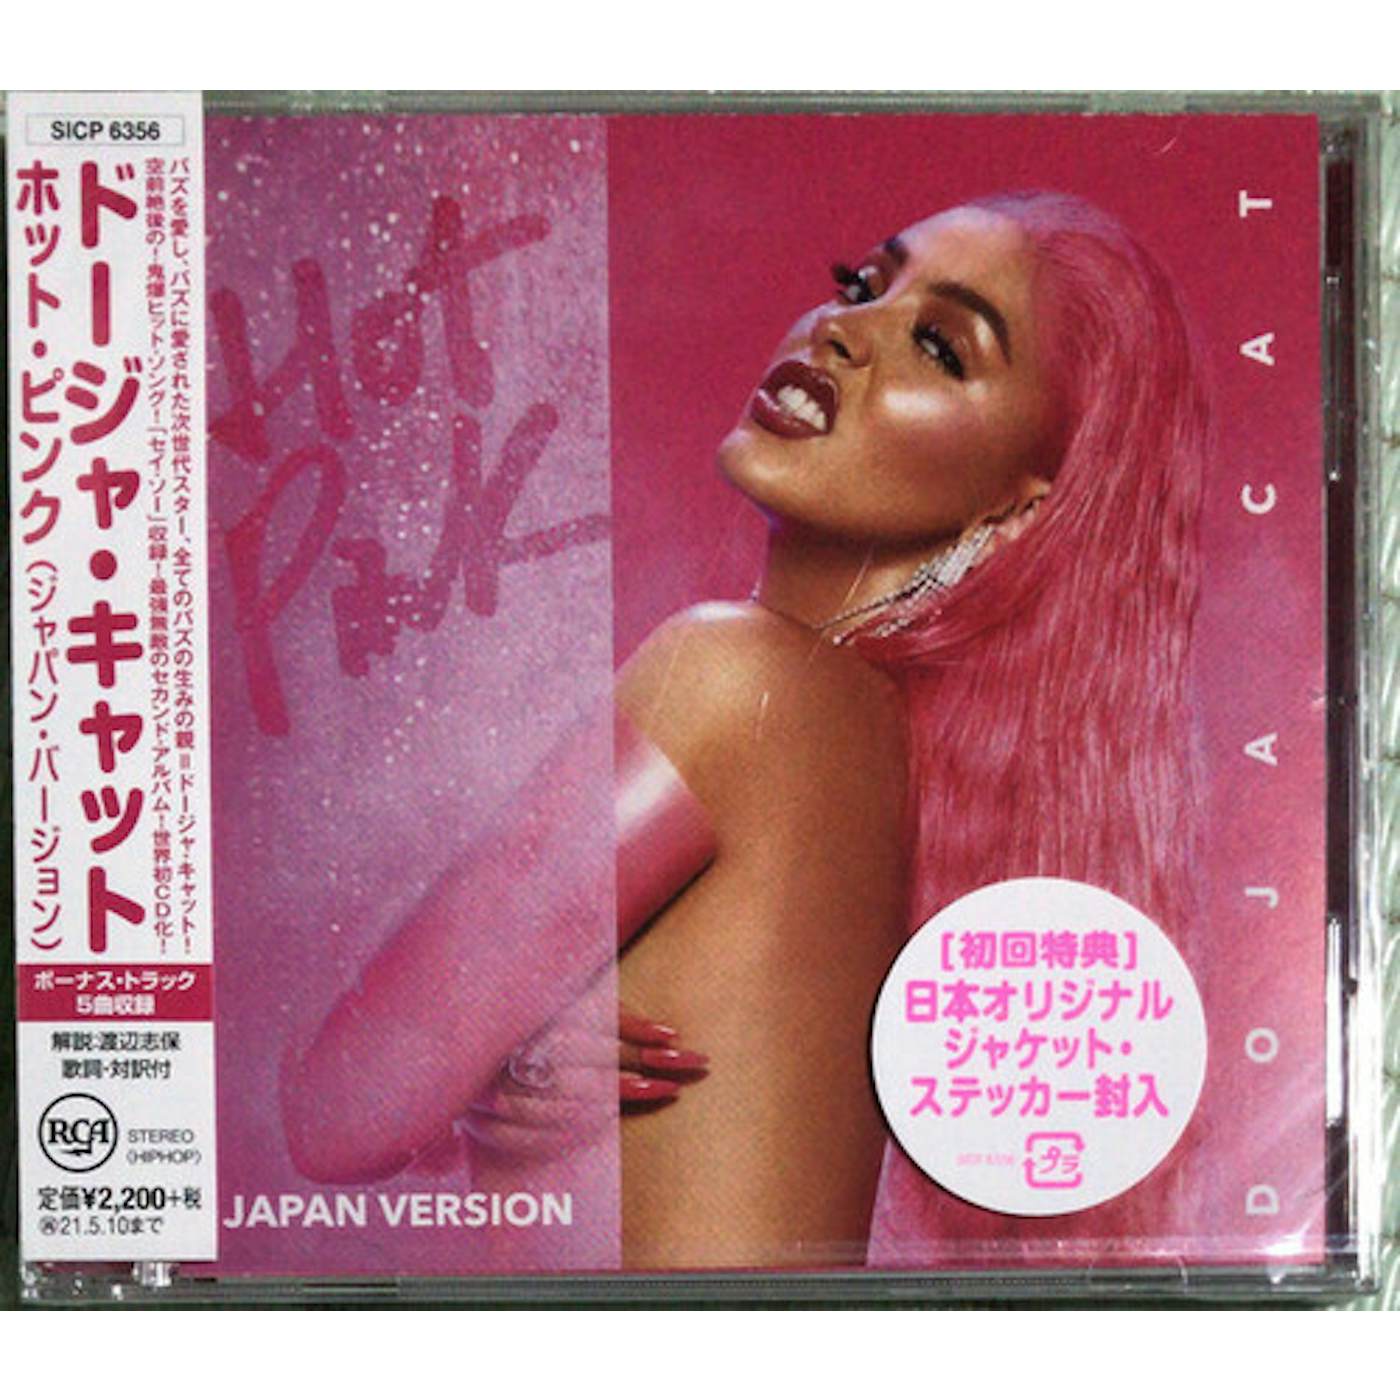 Doja Cat HOT PINK (JAPAN VERSION) CD